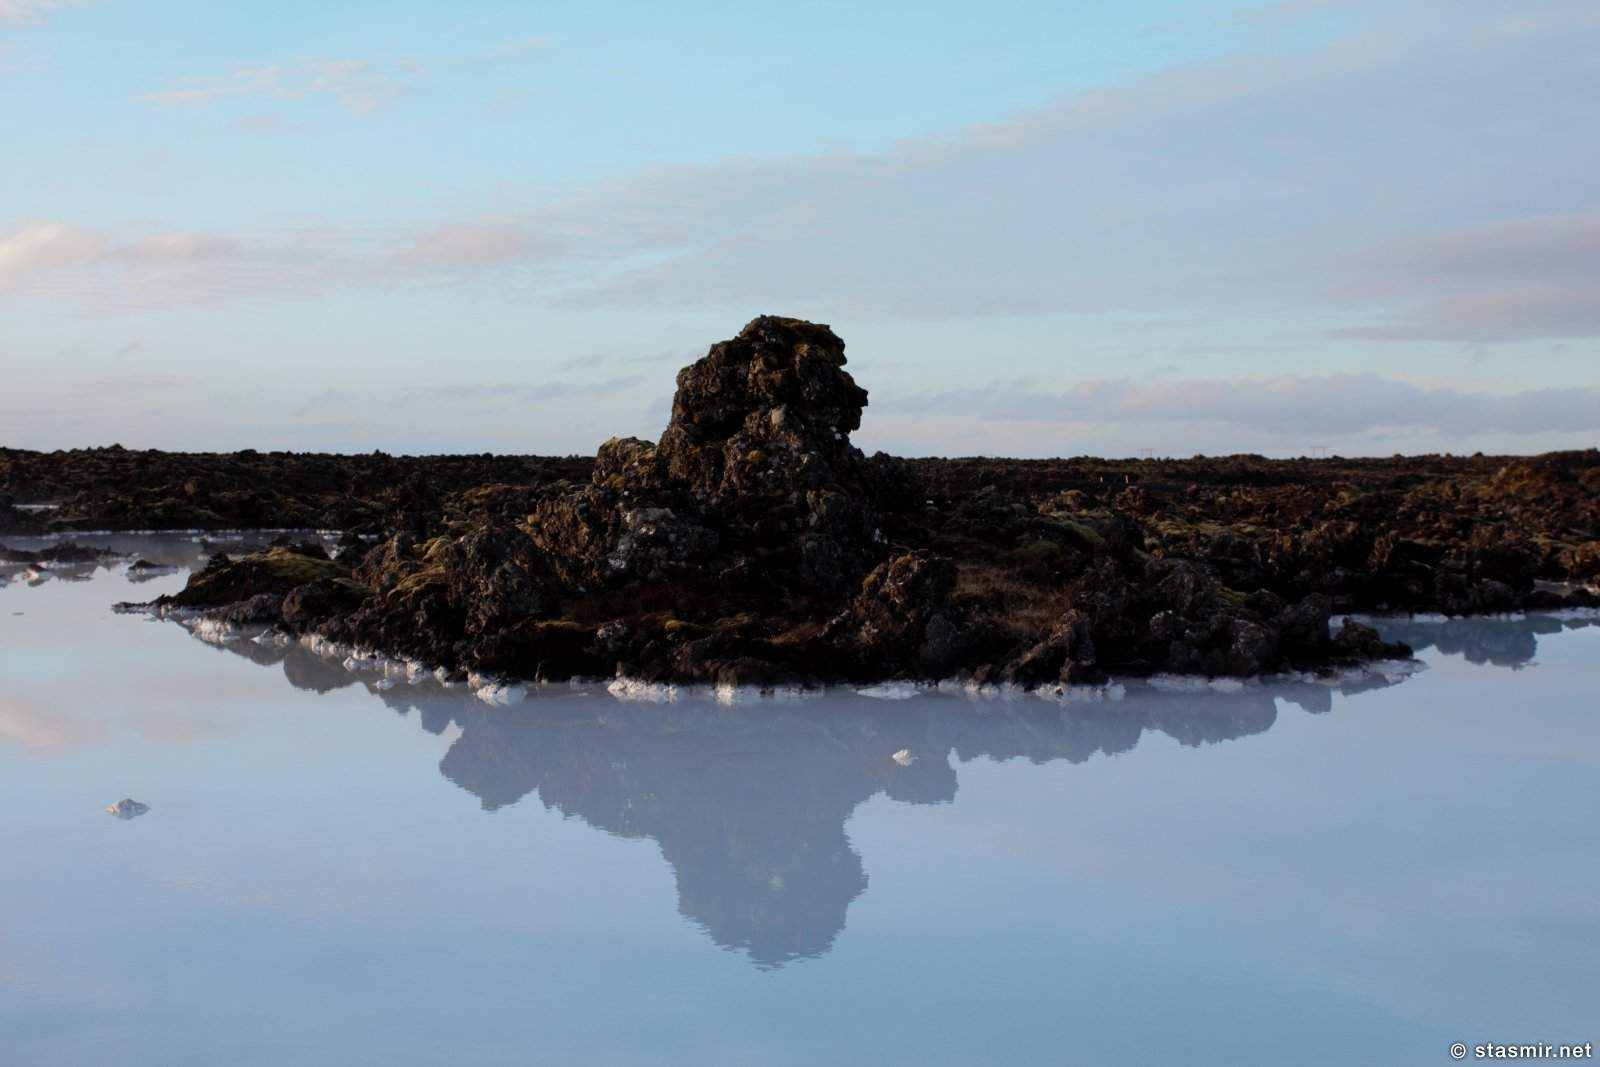 Bláa Lónið, Blue Lagoon, Голубая лагуна, фото Стасмир, photo Stasmir